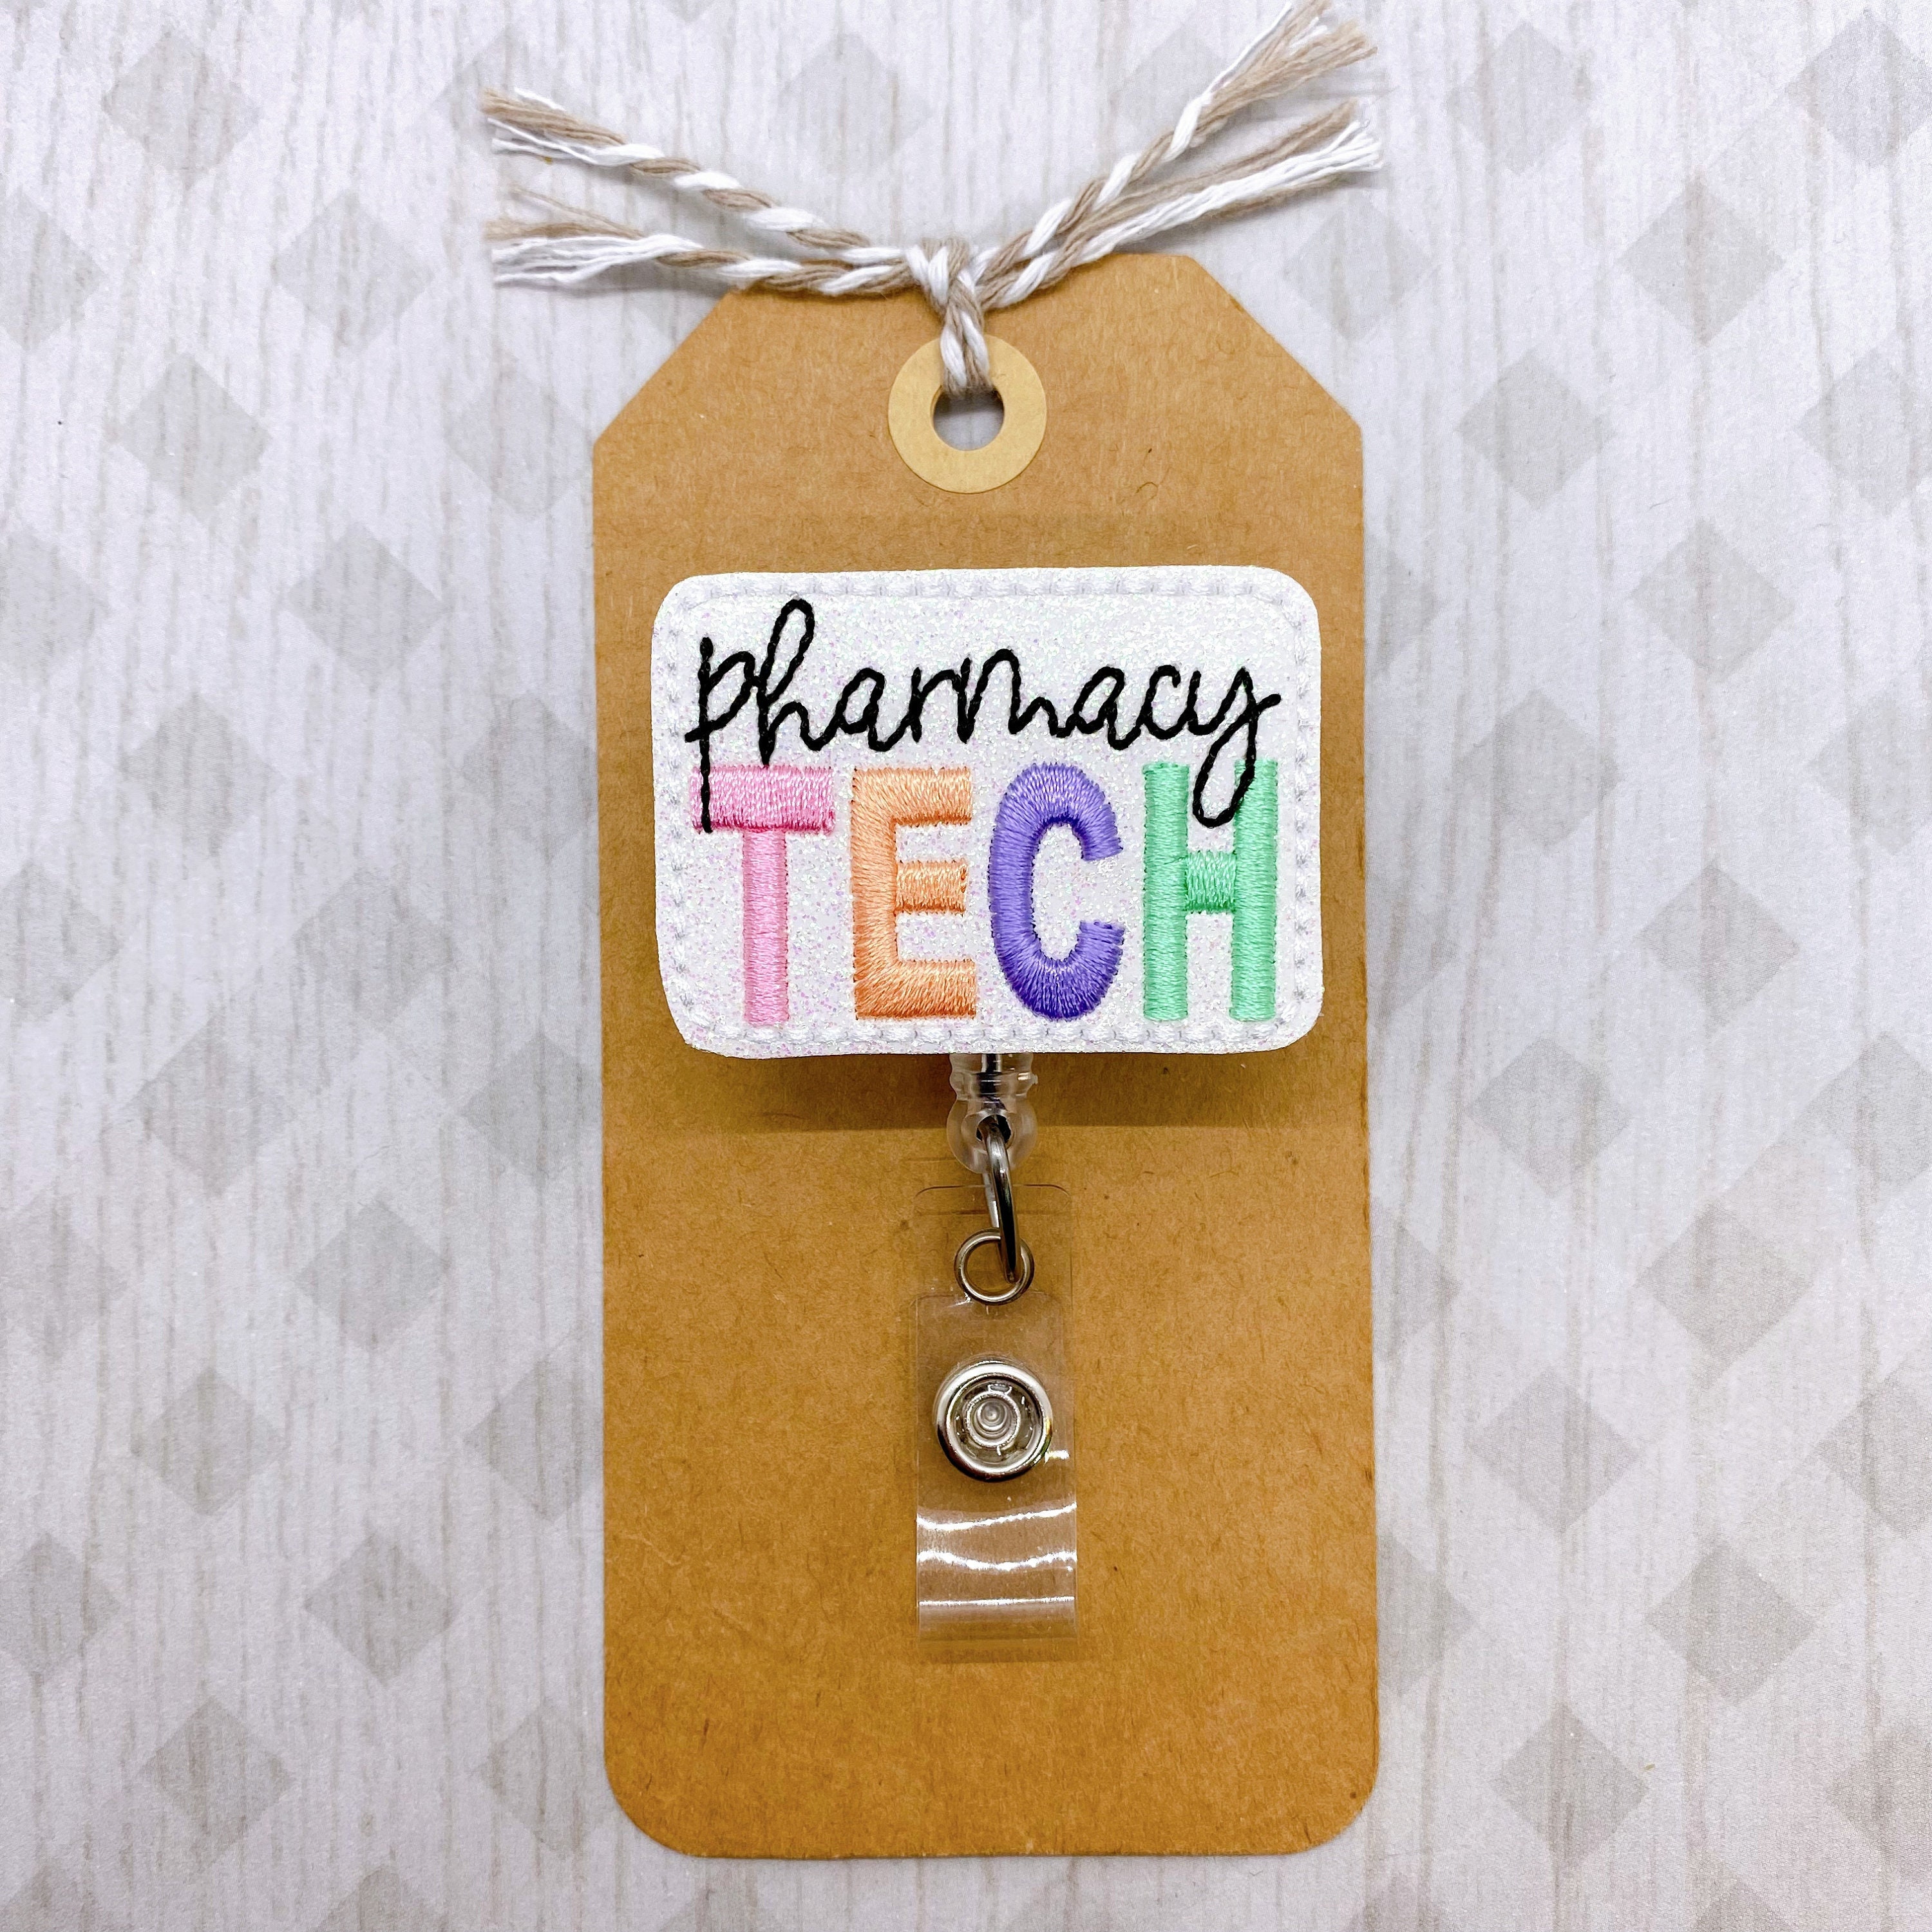 Pharmacy Tech Badge Reel, Pharmacist Badge Reel, Nurse Badge Clip, Medical Lanyard, Badge Buddy, Employee Badge, Retractable ID Badge Holder